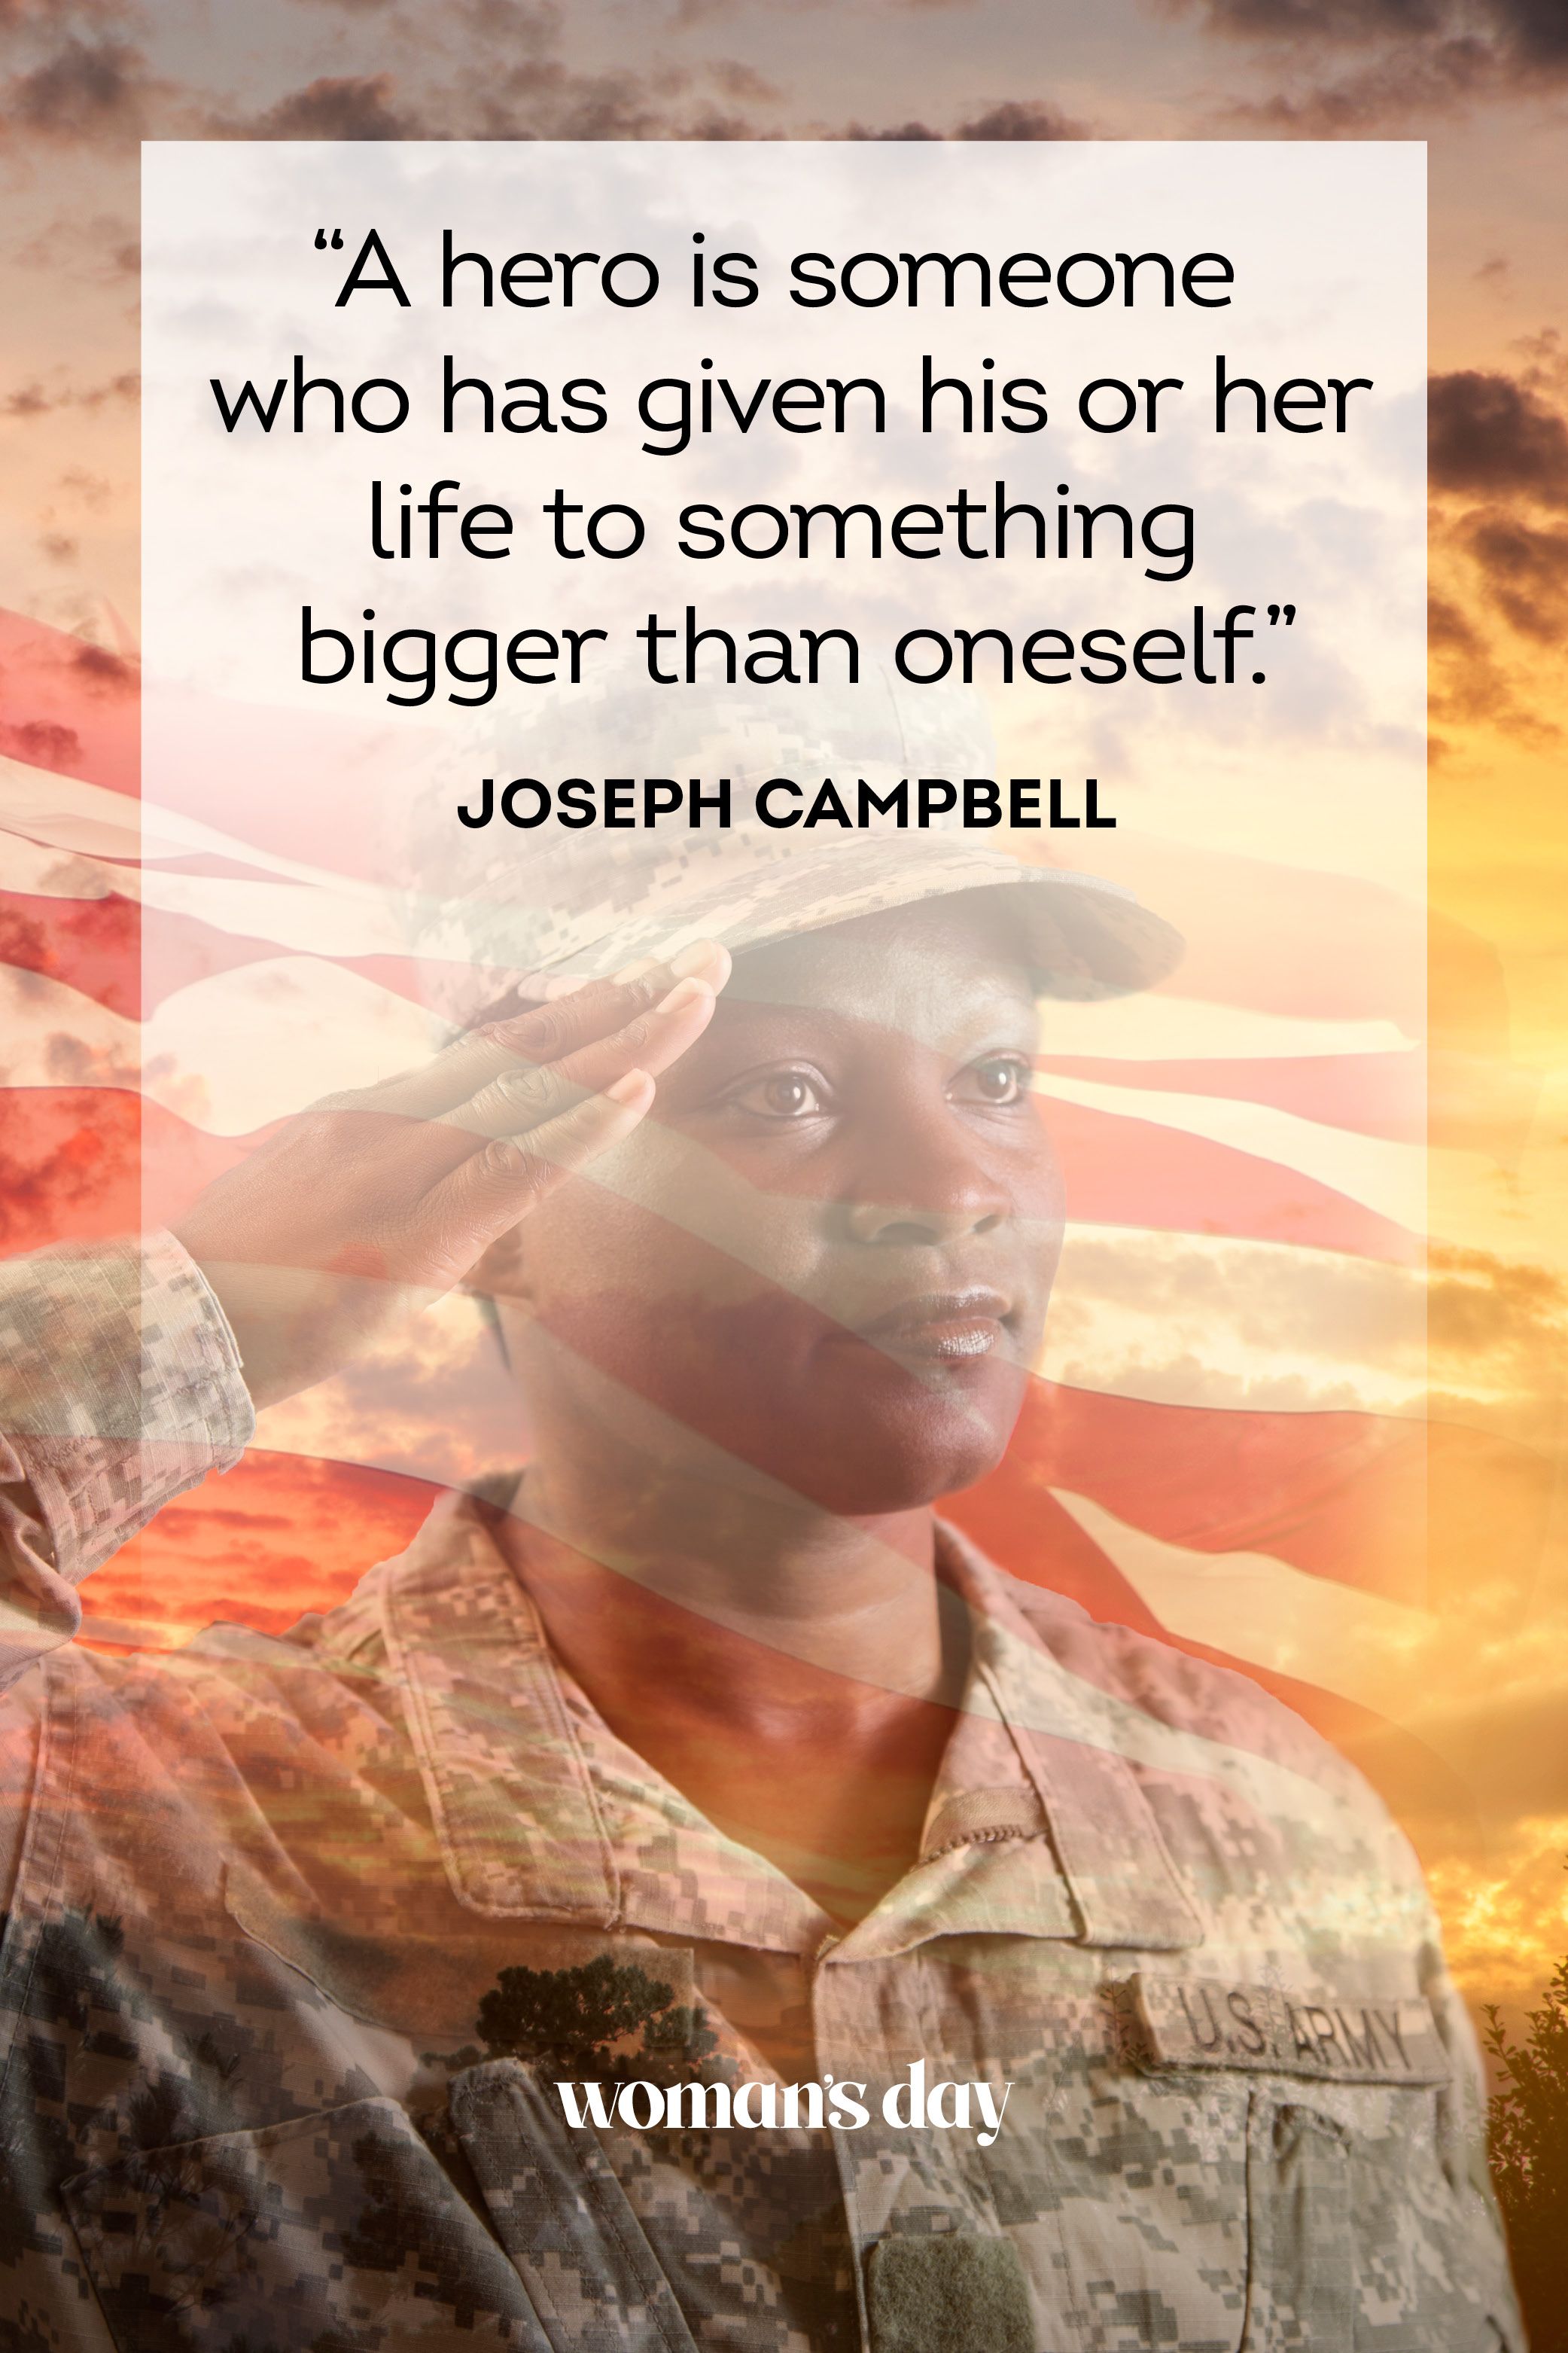 40 Favorite Veterans Day Quotes To Show Gratitude